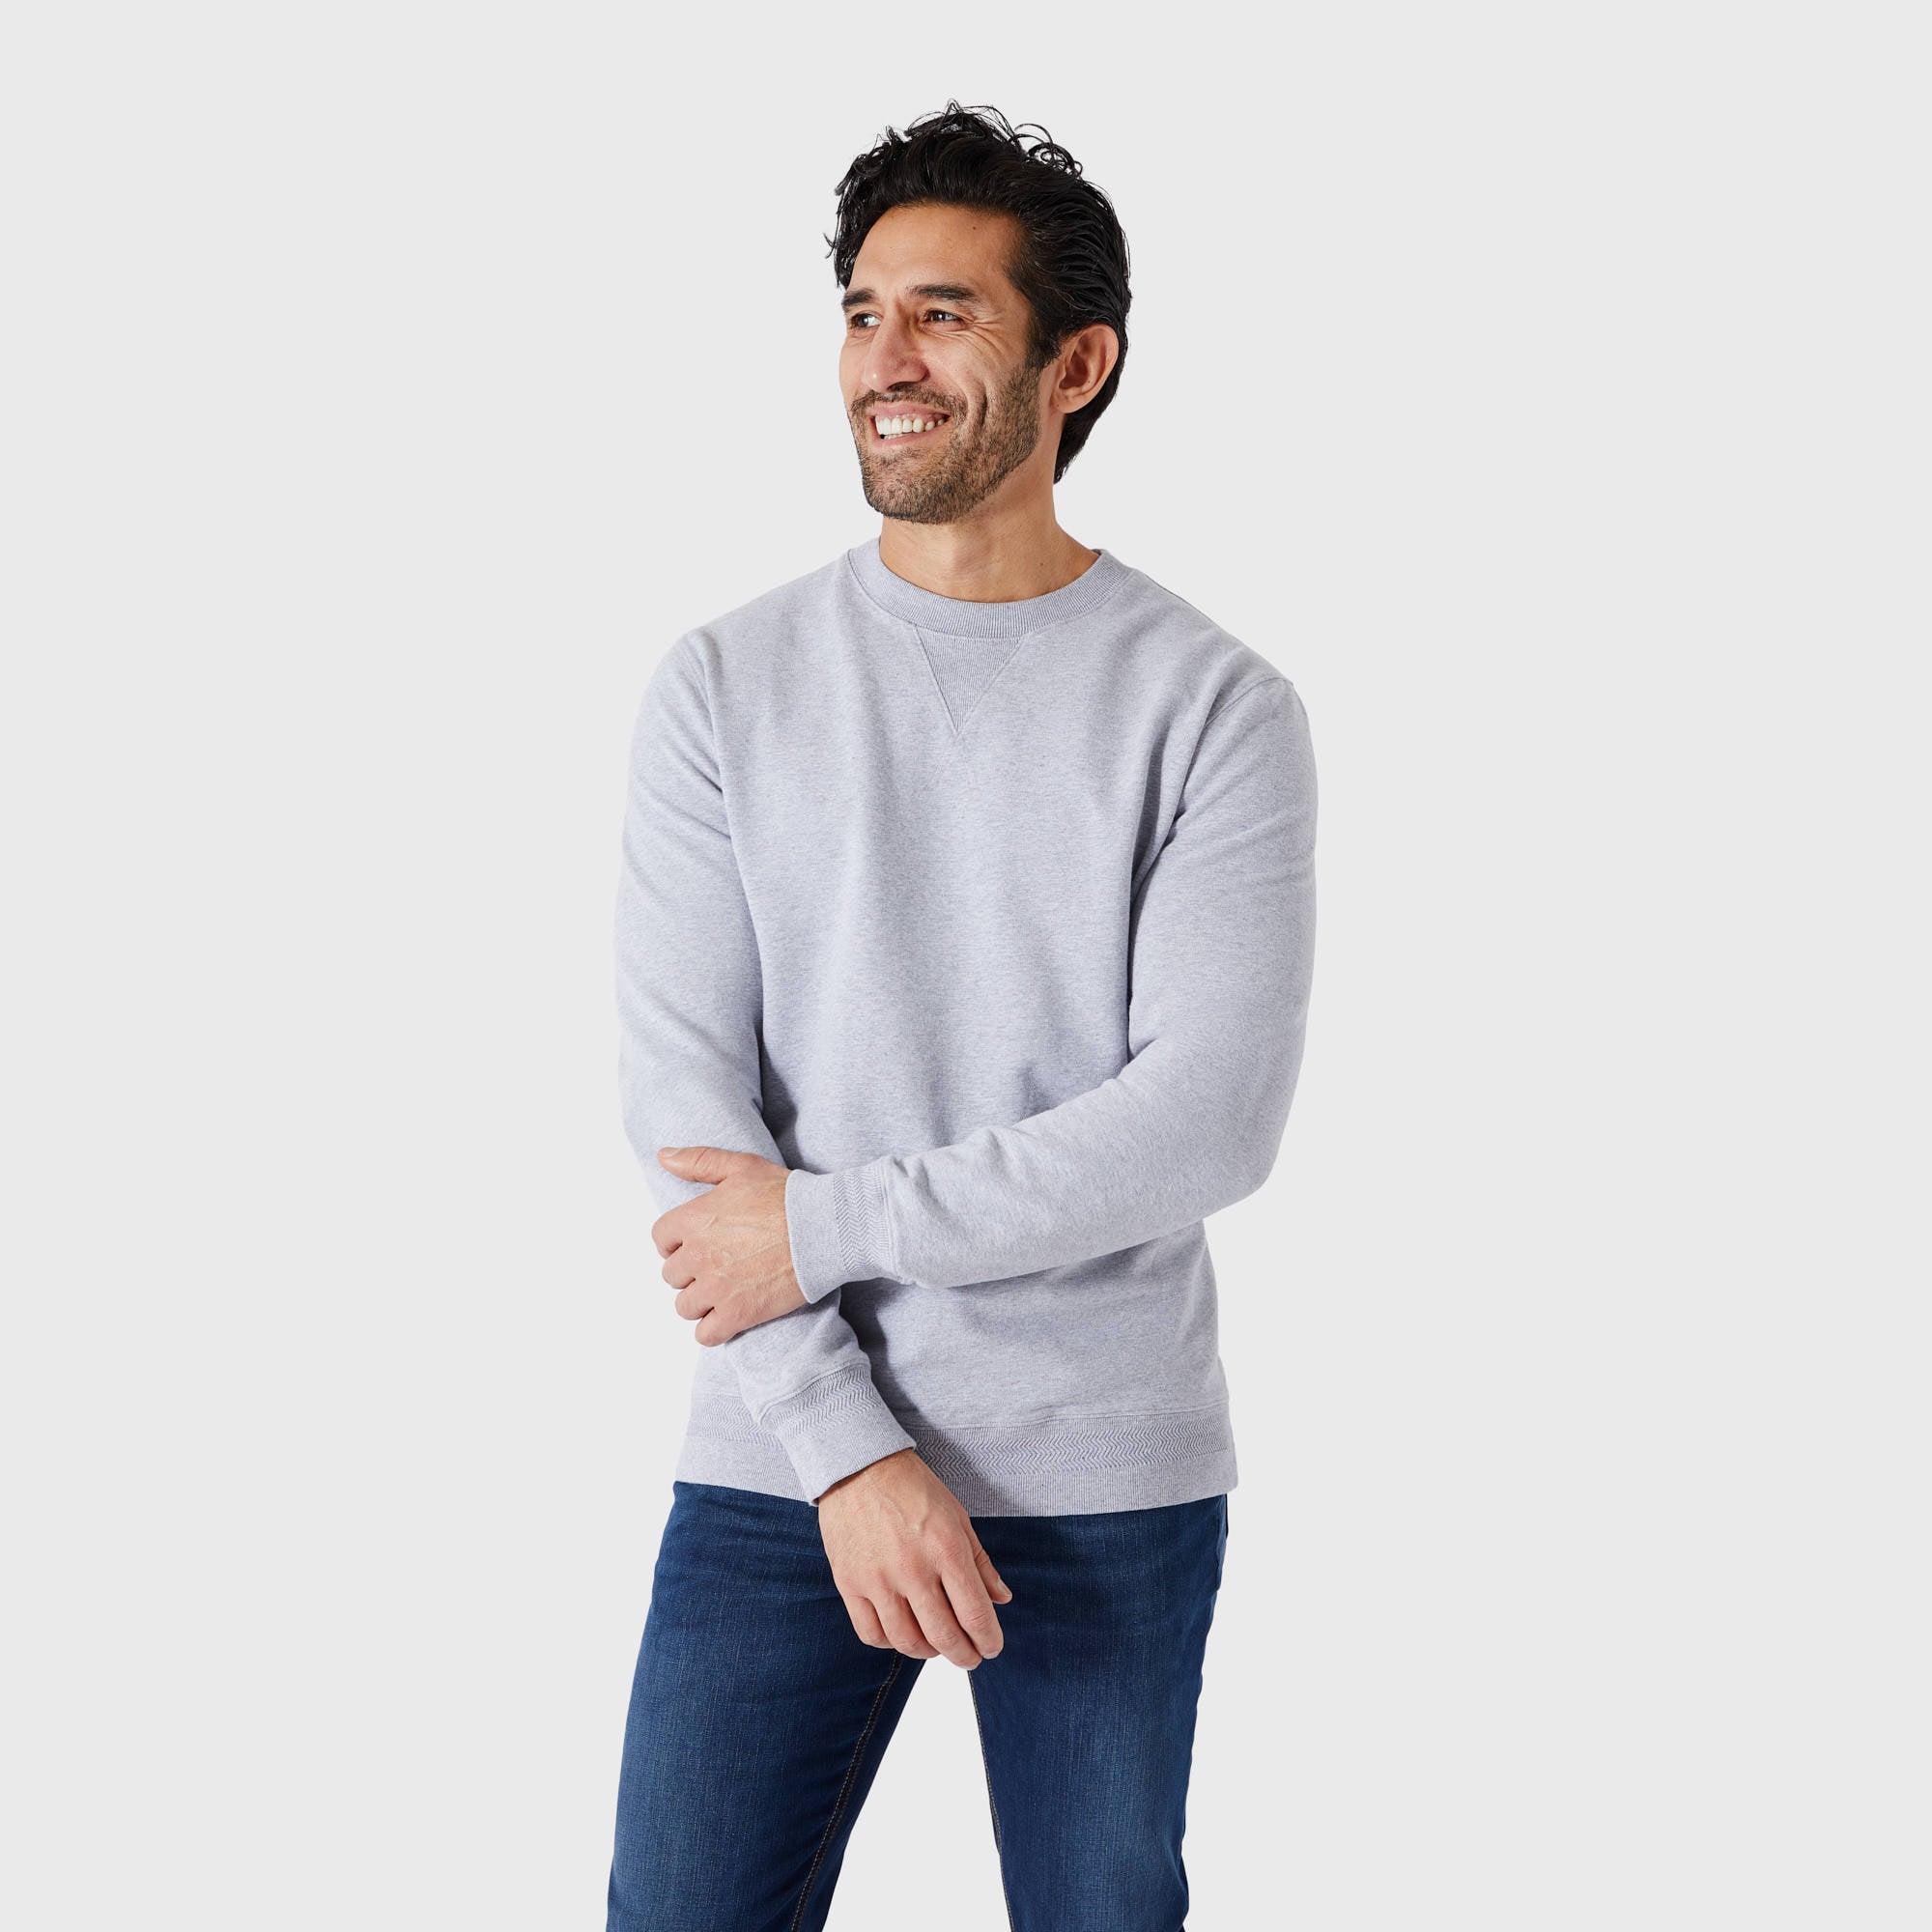 Mens Slim Fit Sweatshirts Sale Online | bellvalefarms.com